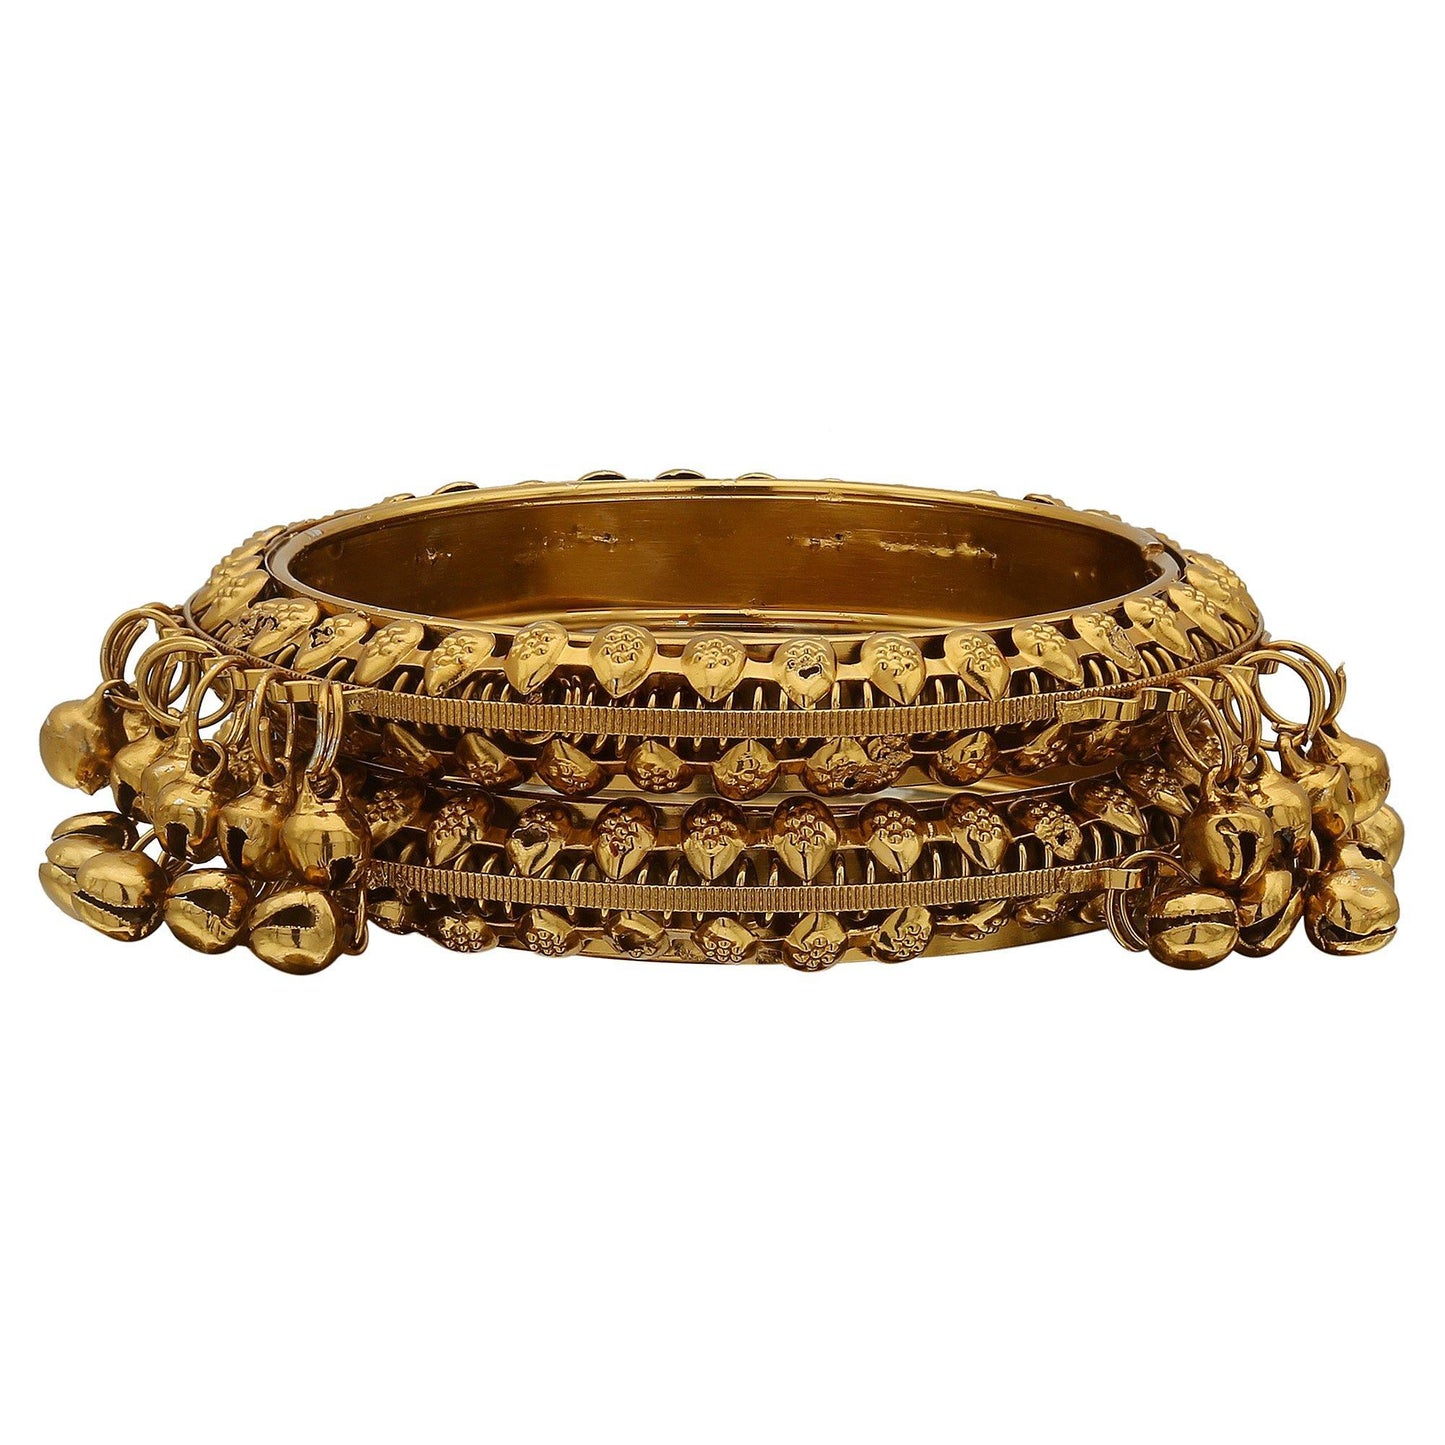 sukriti indian stylish antique gold tone bangles party wear jewelry for girls & women - set of 2